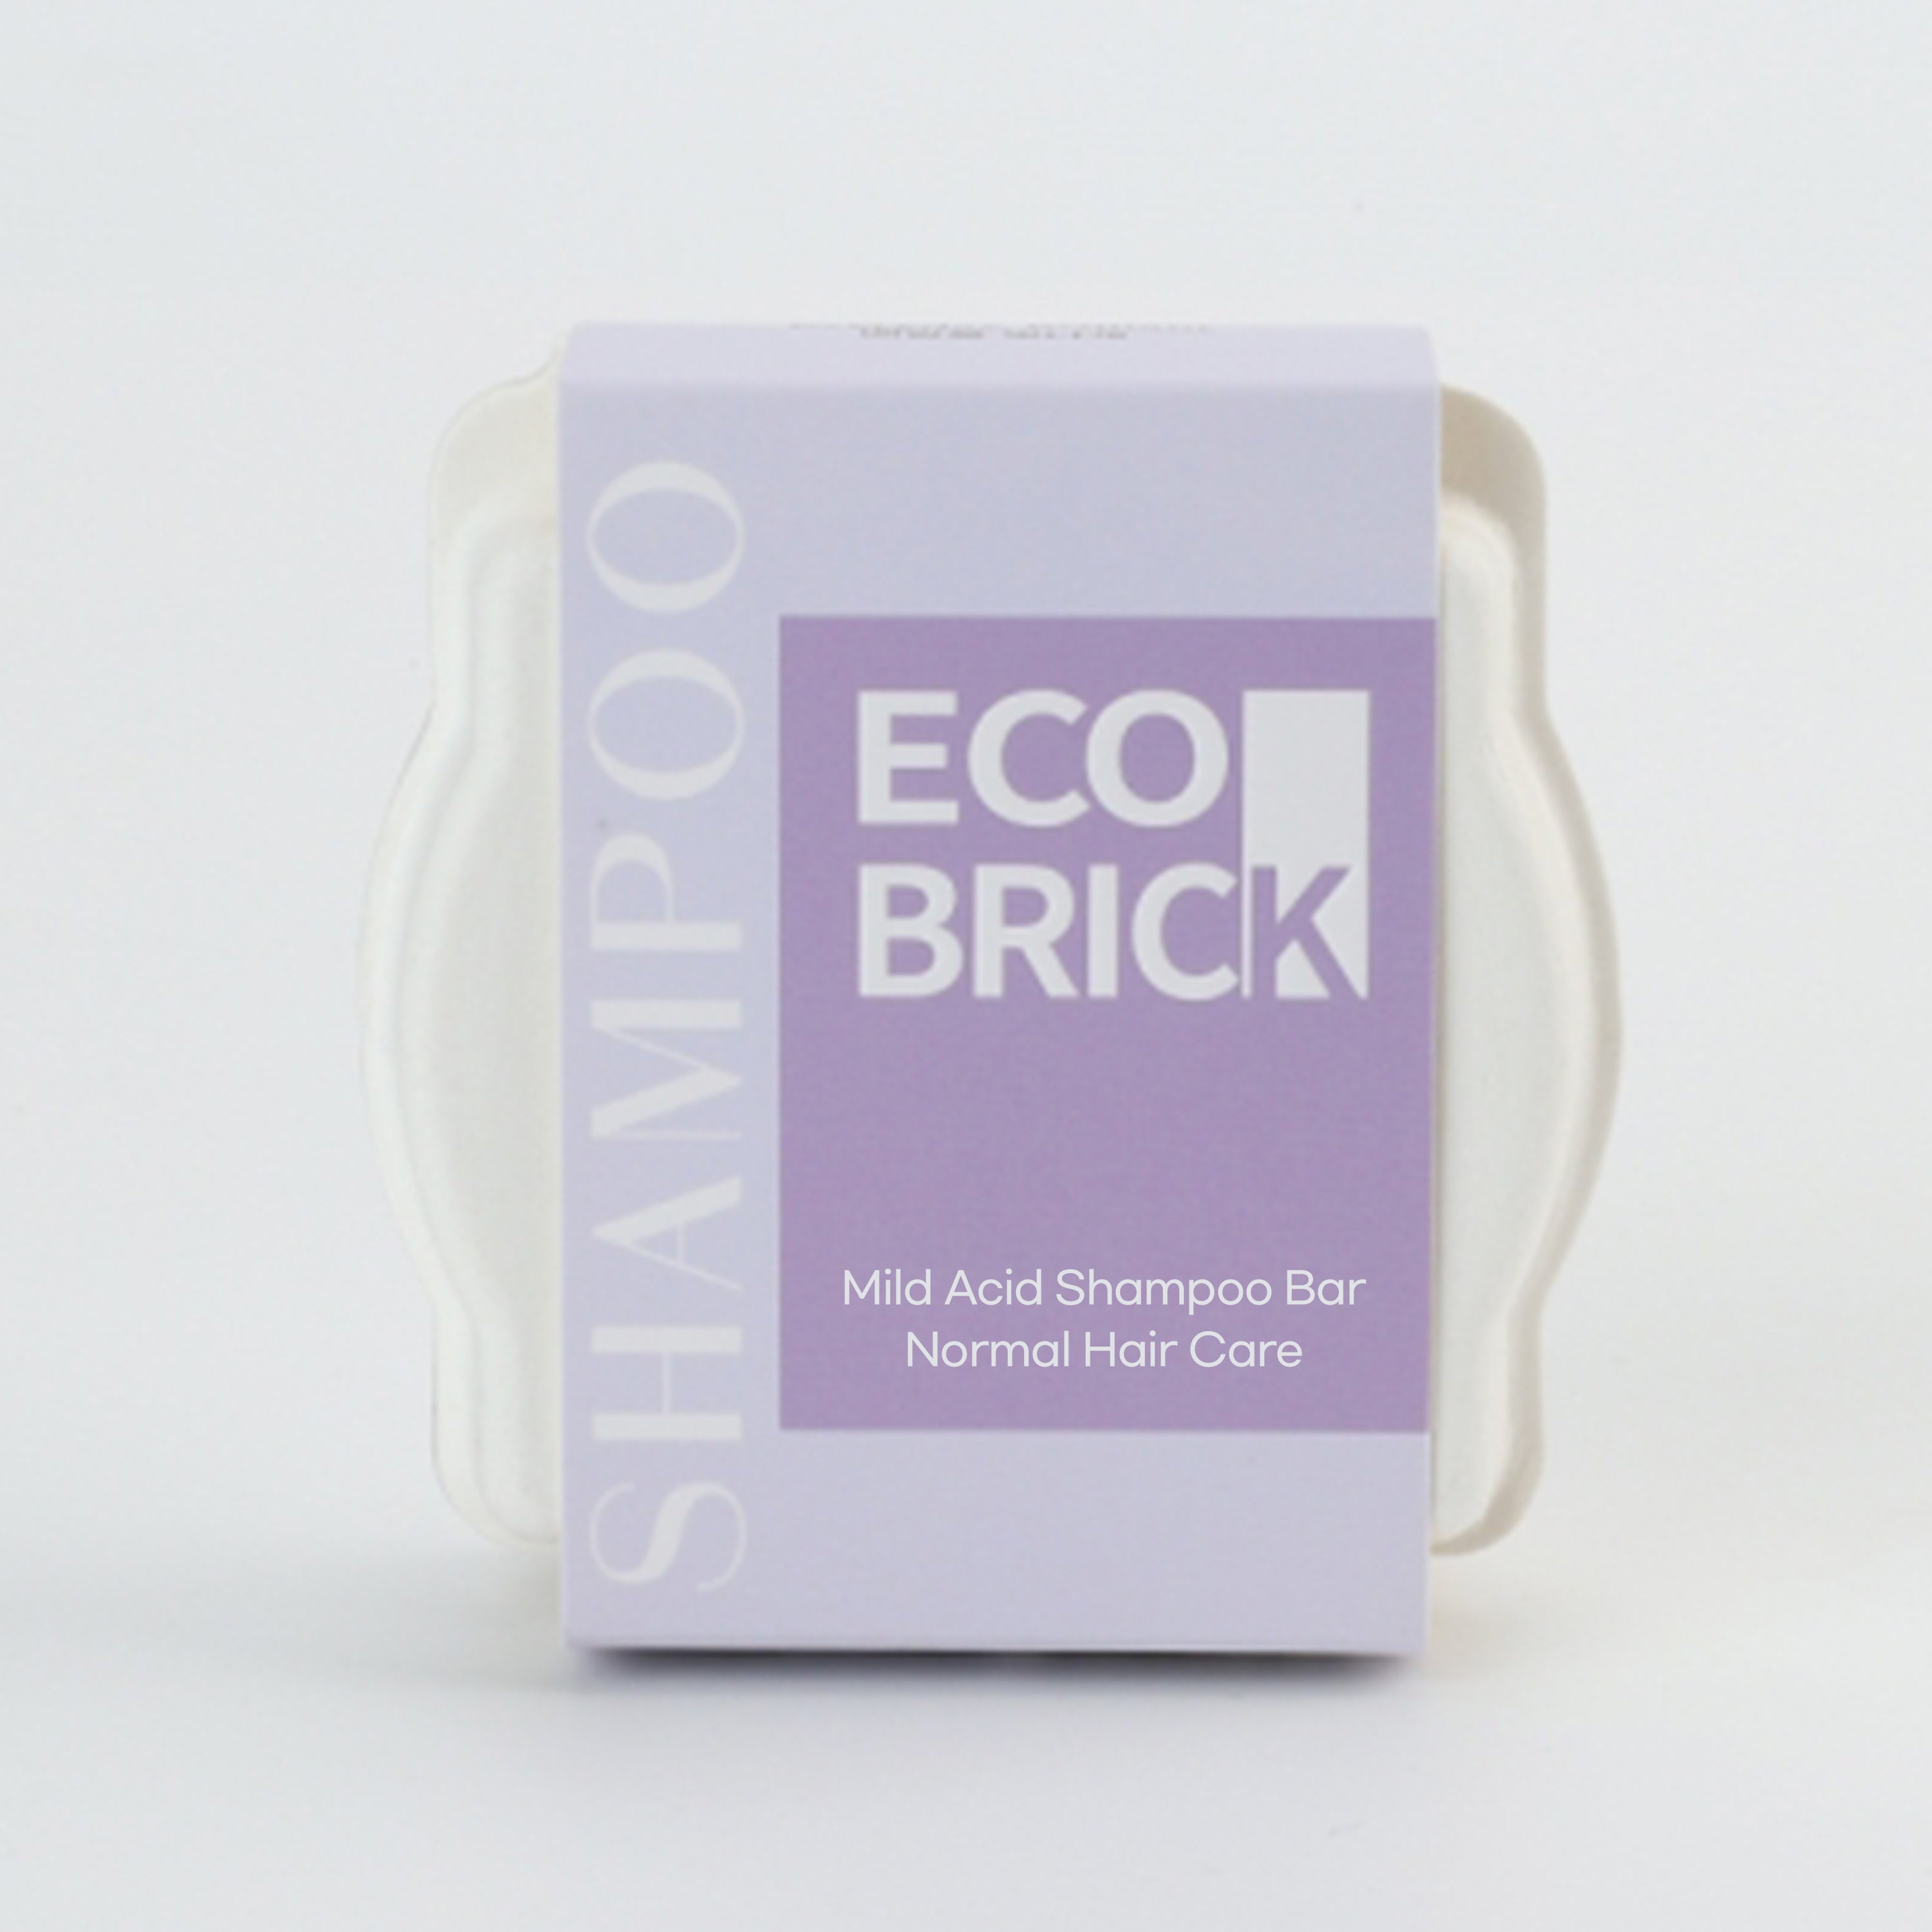 EcoBrick Mild Acidic Shampoo Bar (3 Types)